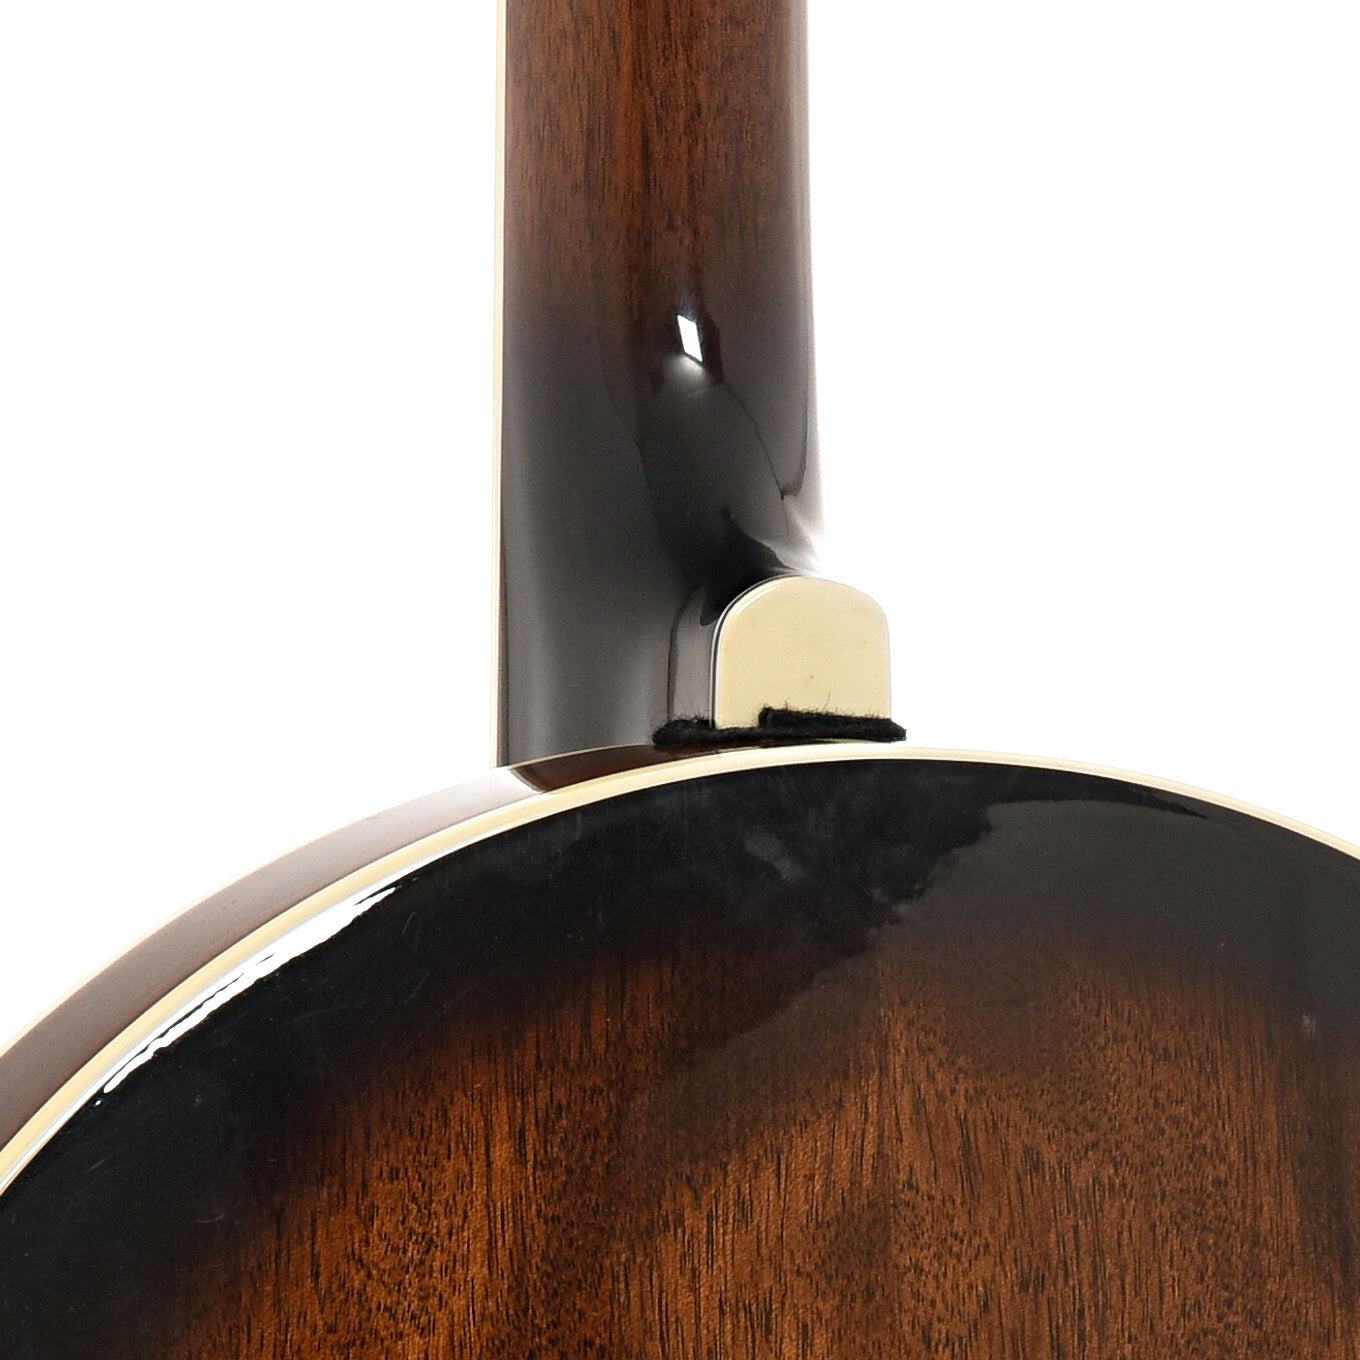 Heel of Gold Tone BG-150F Resonator Banjo